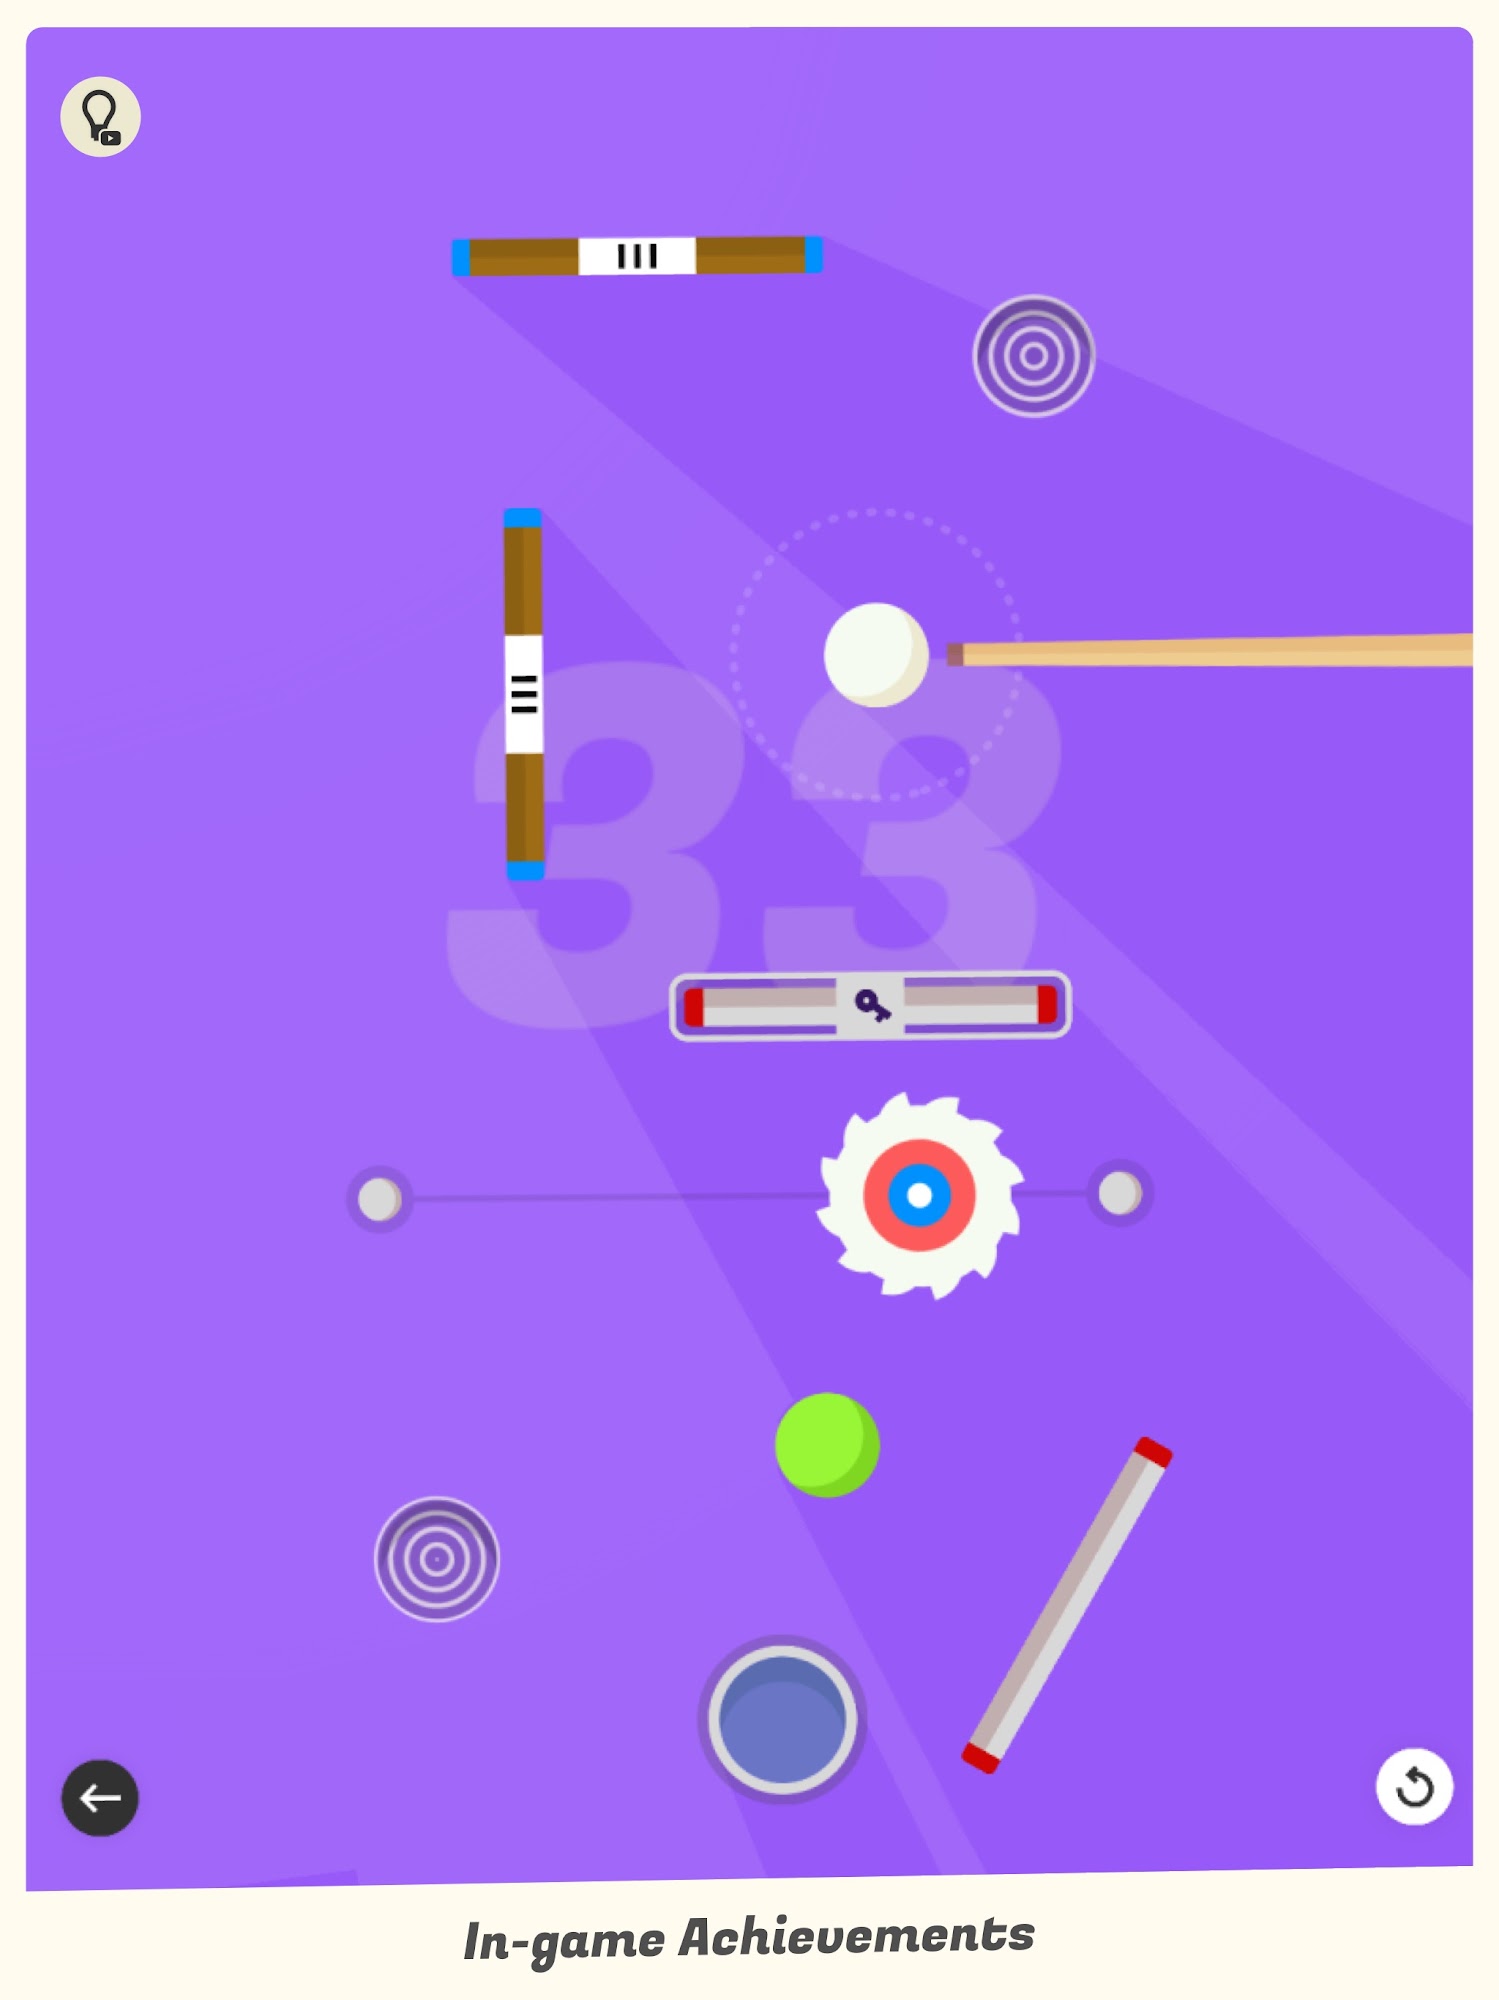 Last Pocket - Android game screenshots.